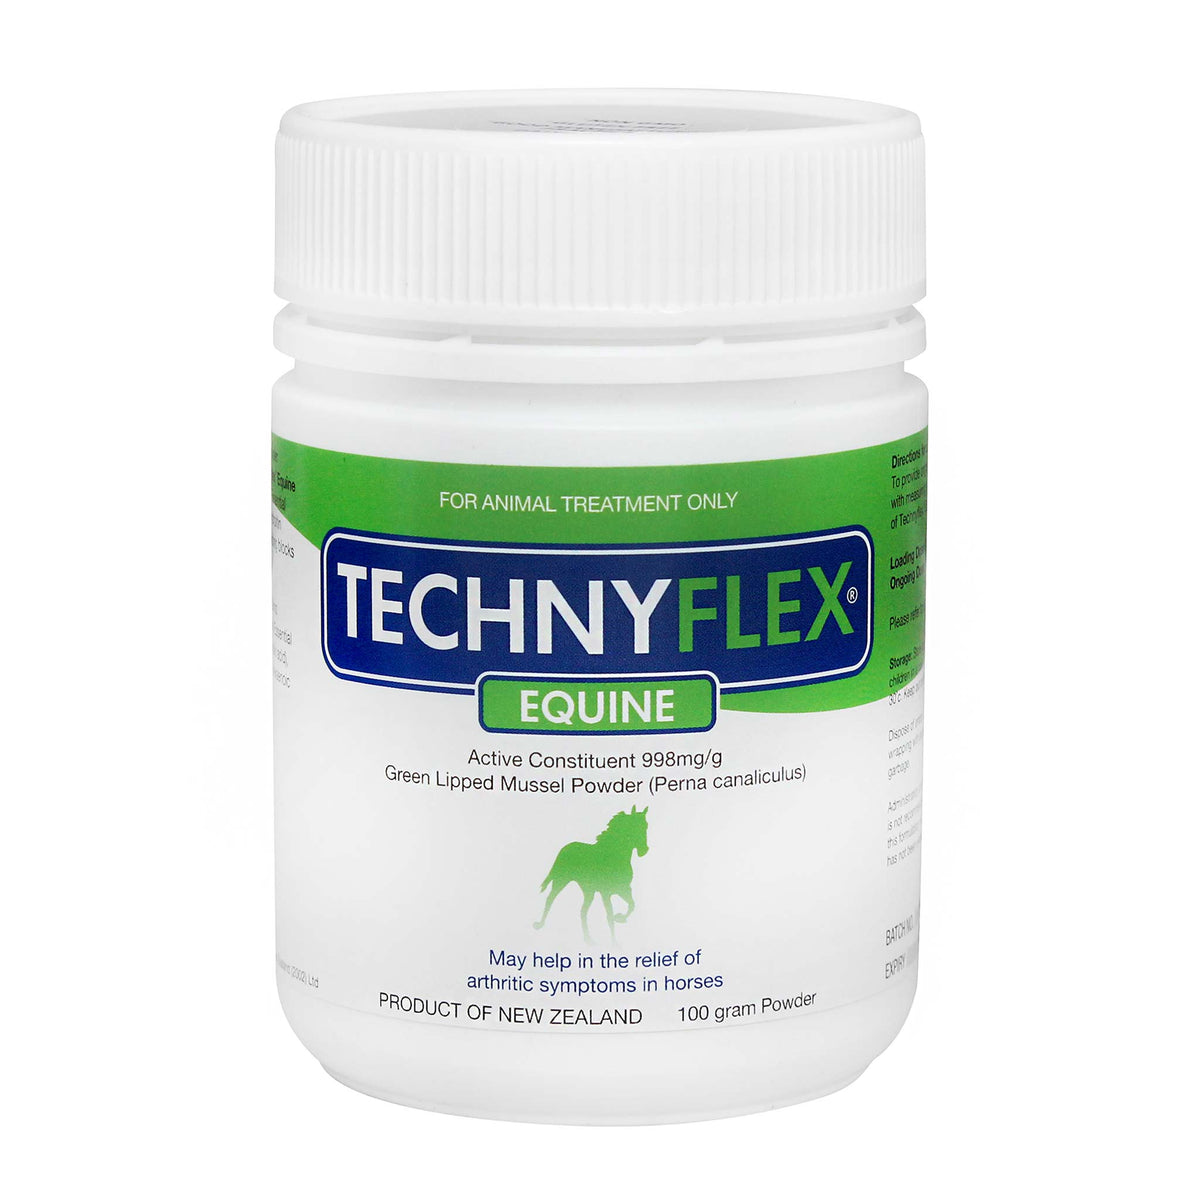 Technyflex Equine Natural Anti-inflammatory Powder for Horses